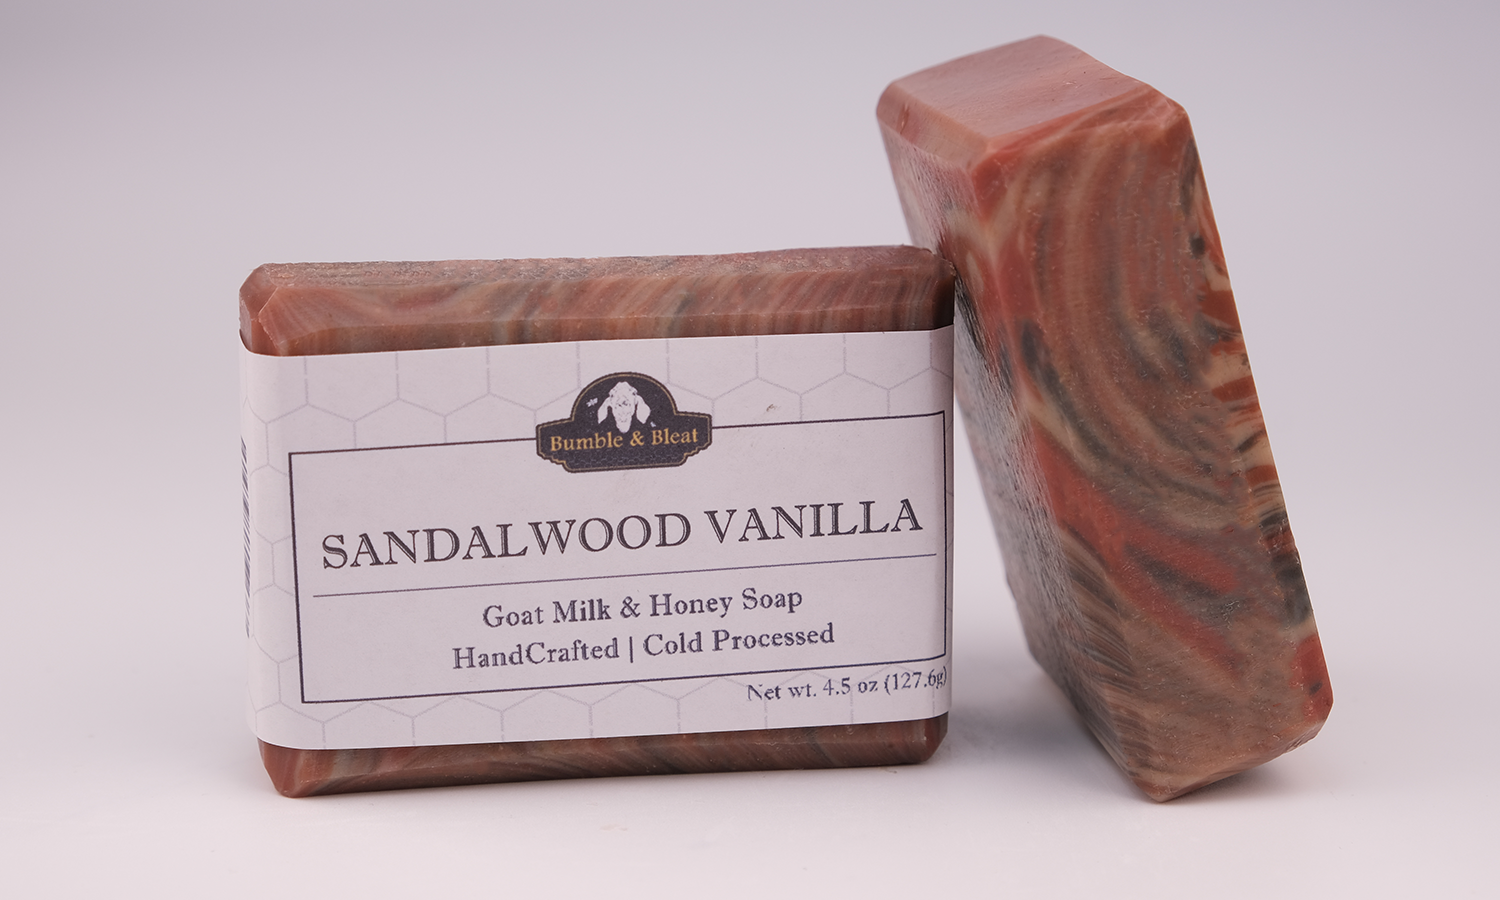 Sandalwood Vanilla goat milk and honey soap bar